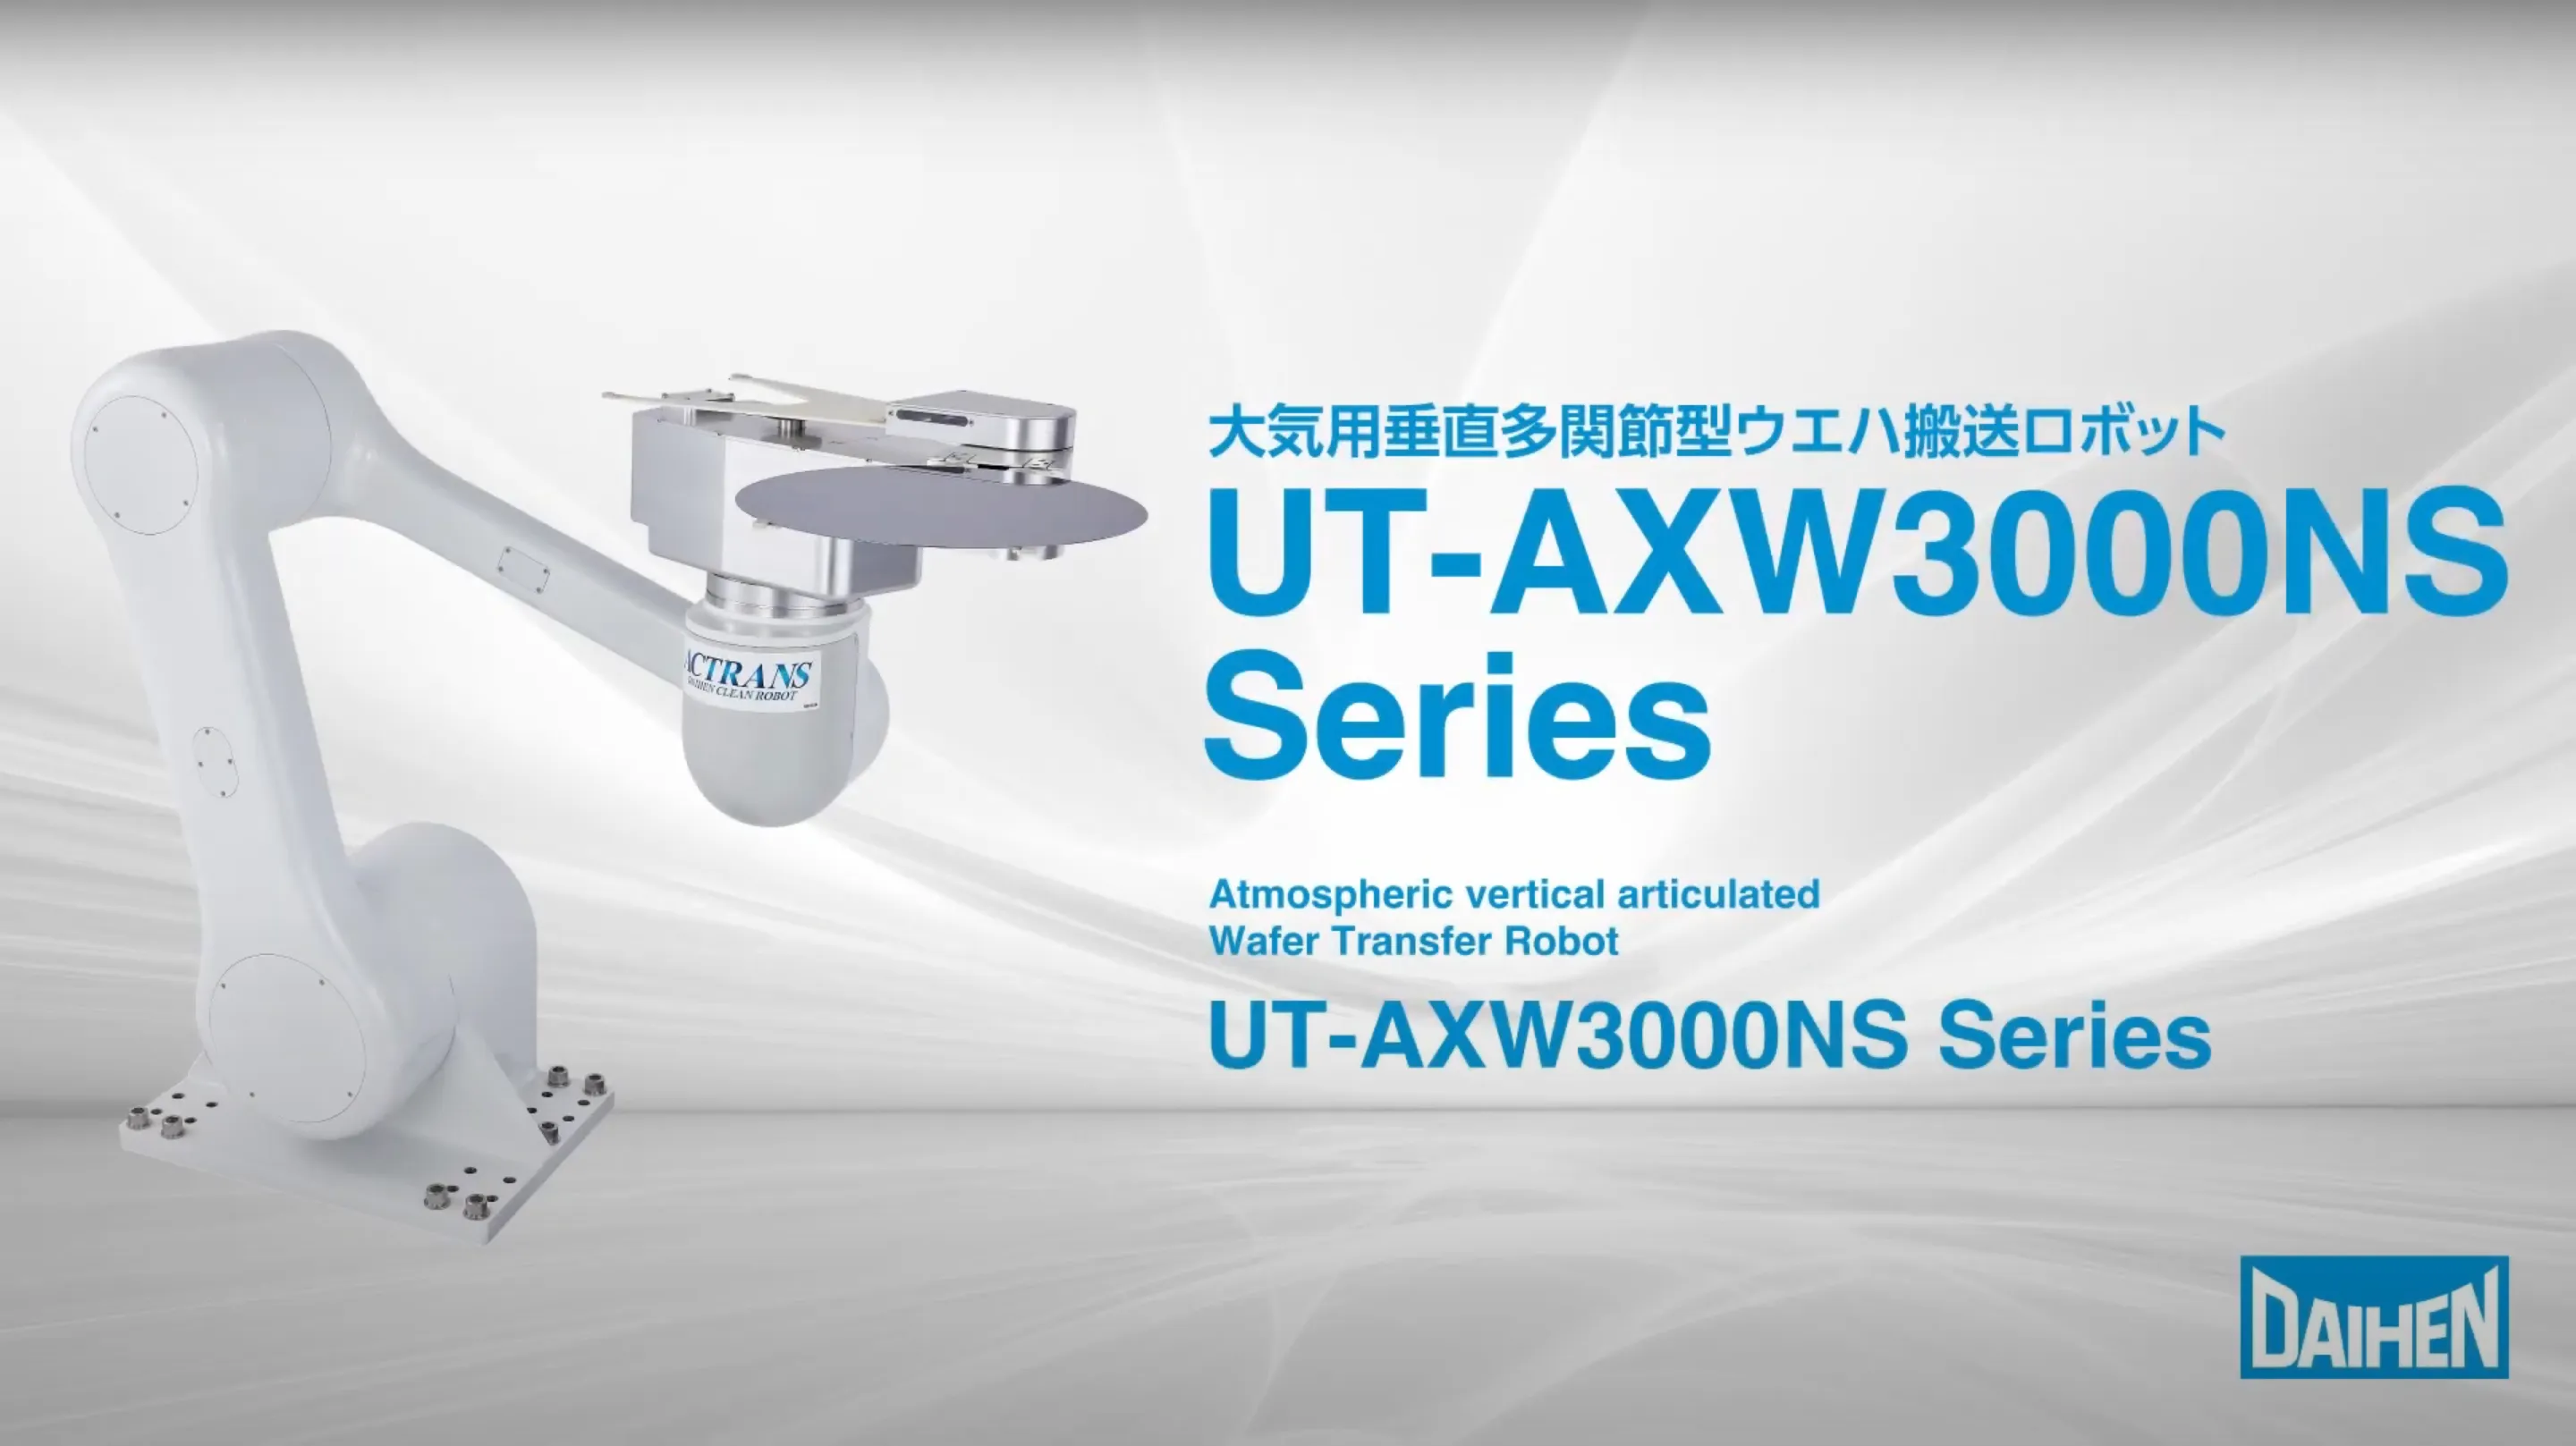 UT-AXW3000NSの動画のサムネイル